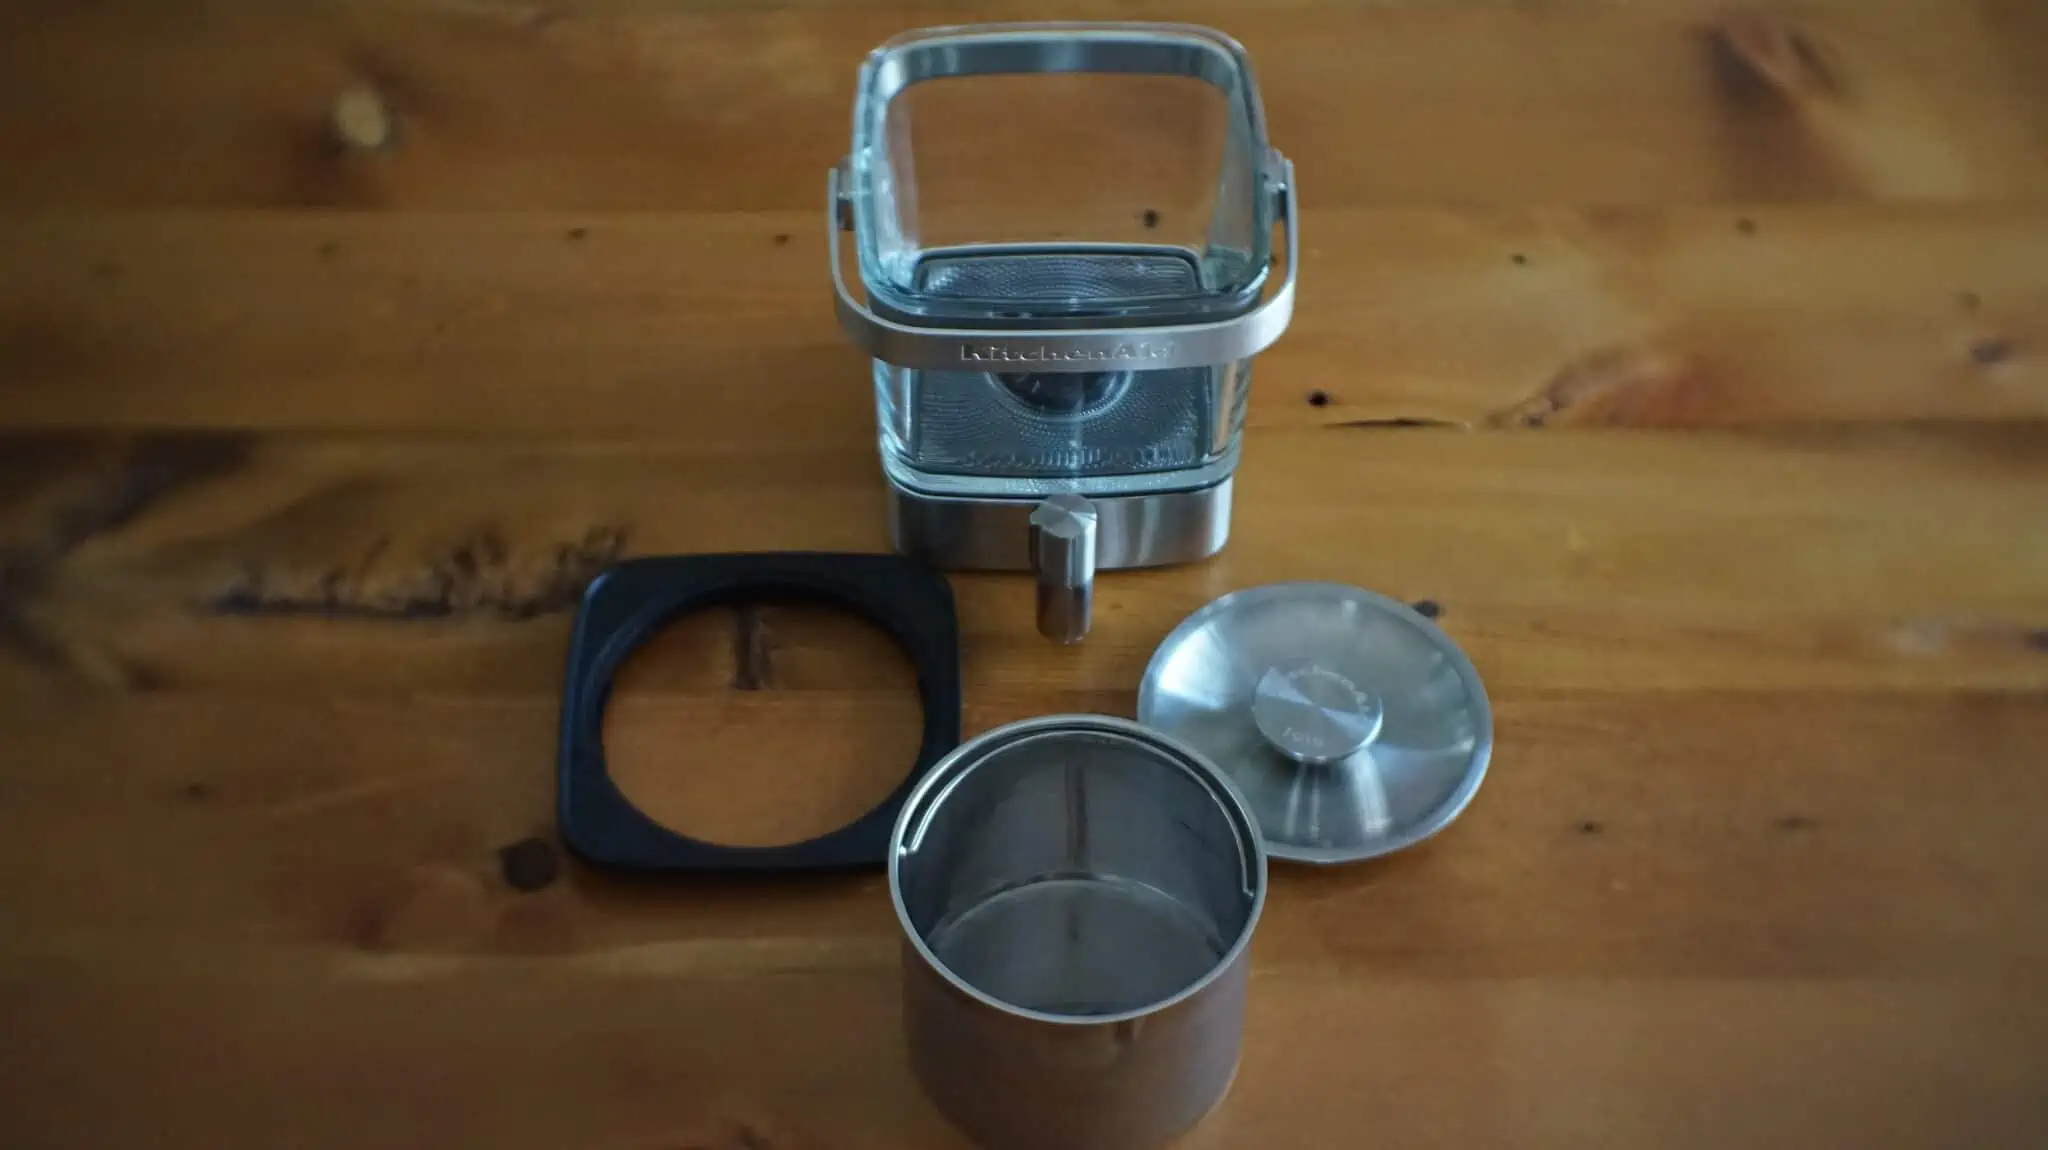 KitchenAid 38 oz Cold Brew Coffee Maker